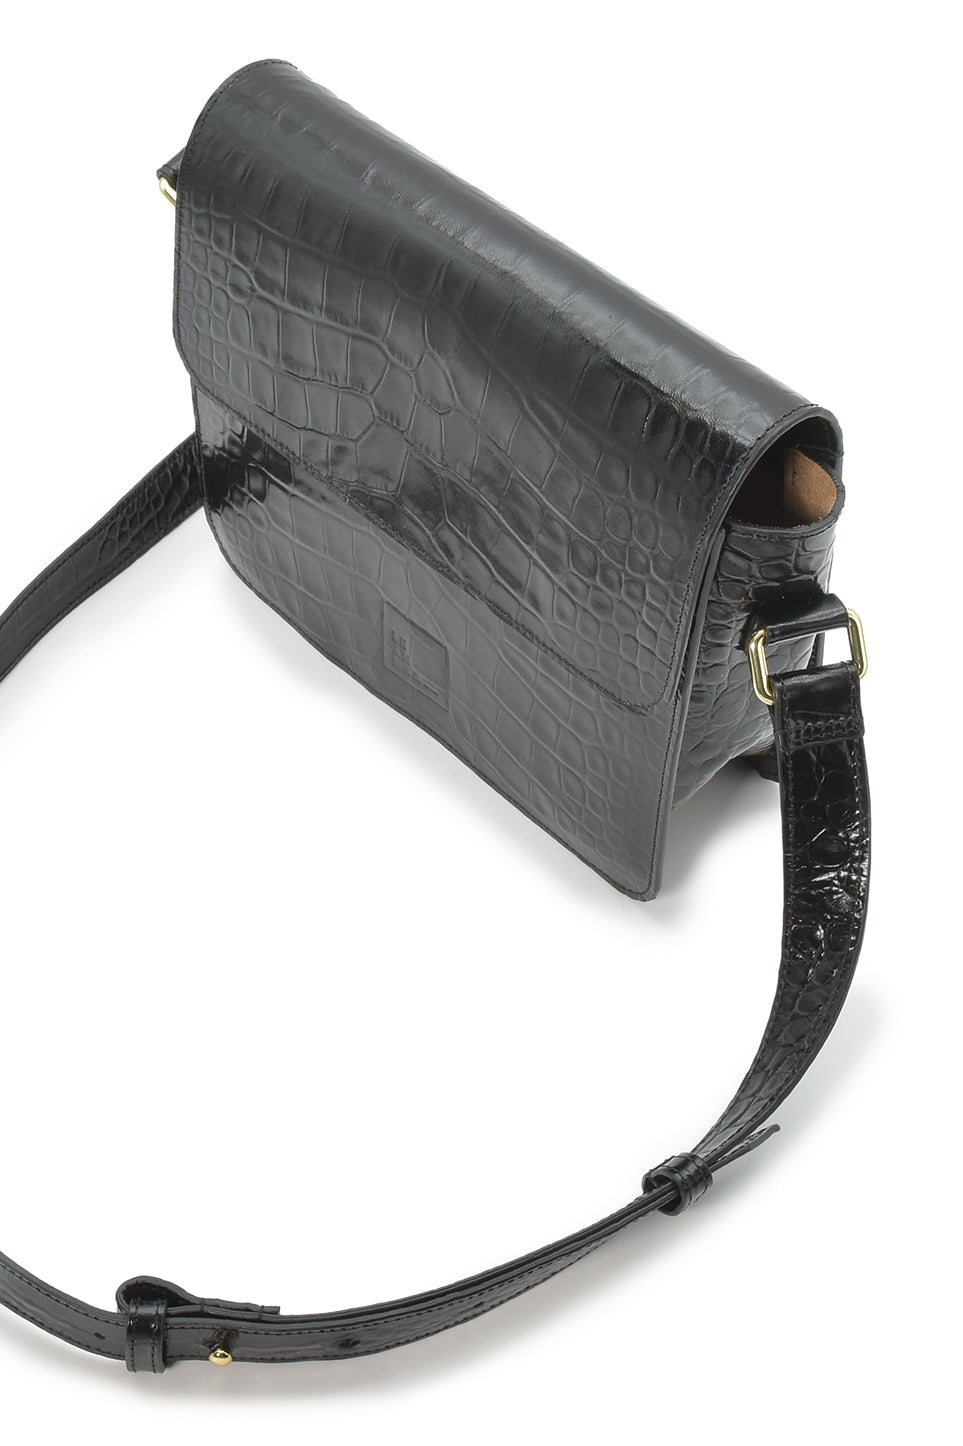 Square shoulder bag with printed black leather flap